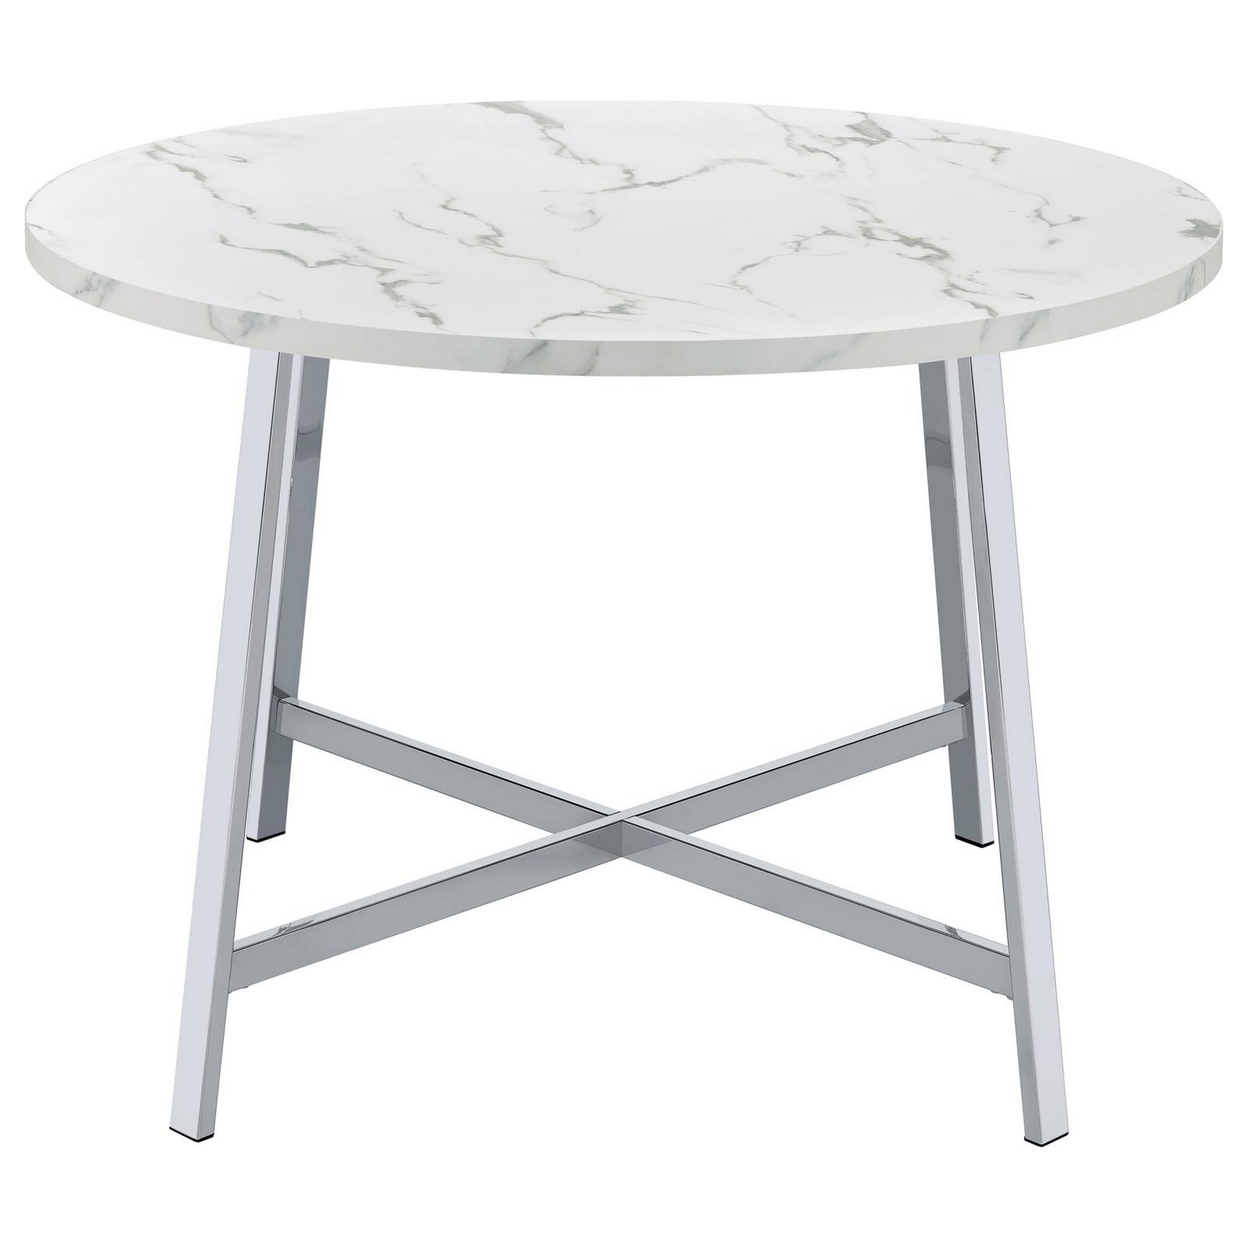 45 Inch Dining Table, Faux Carrara Round Marble Top, Chrome Metal Legs -Saltoro Sherpi